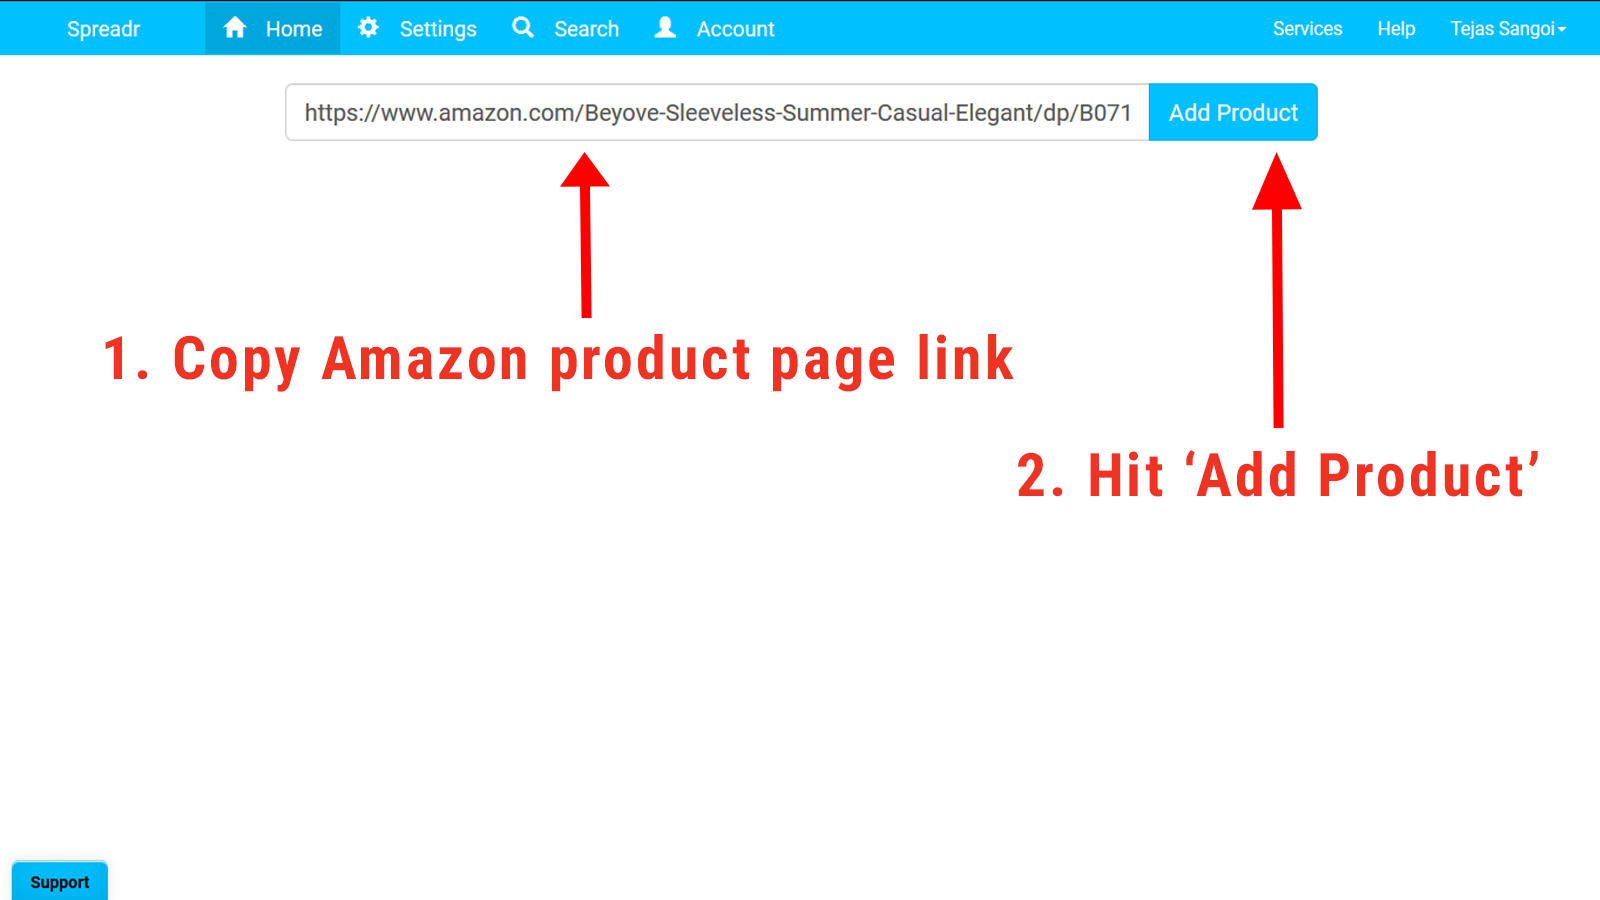 Kopier Amazon produkt side link